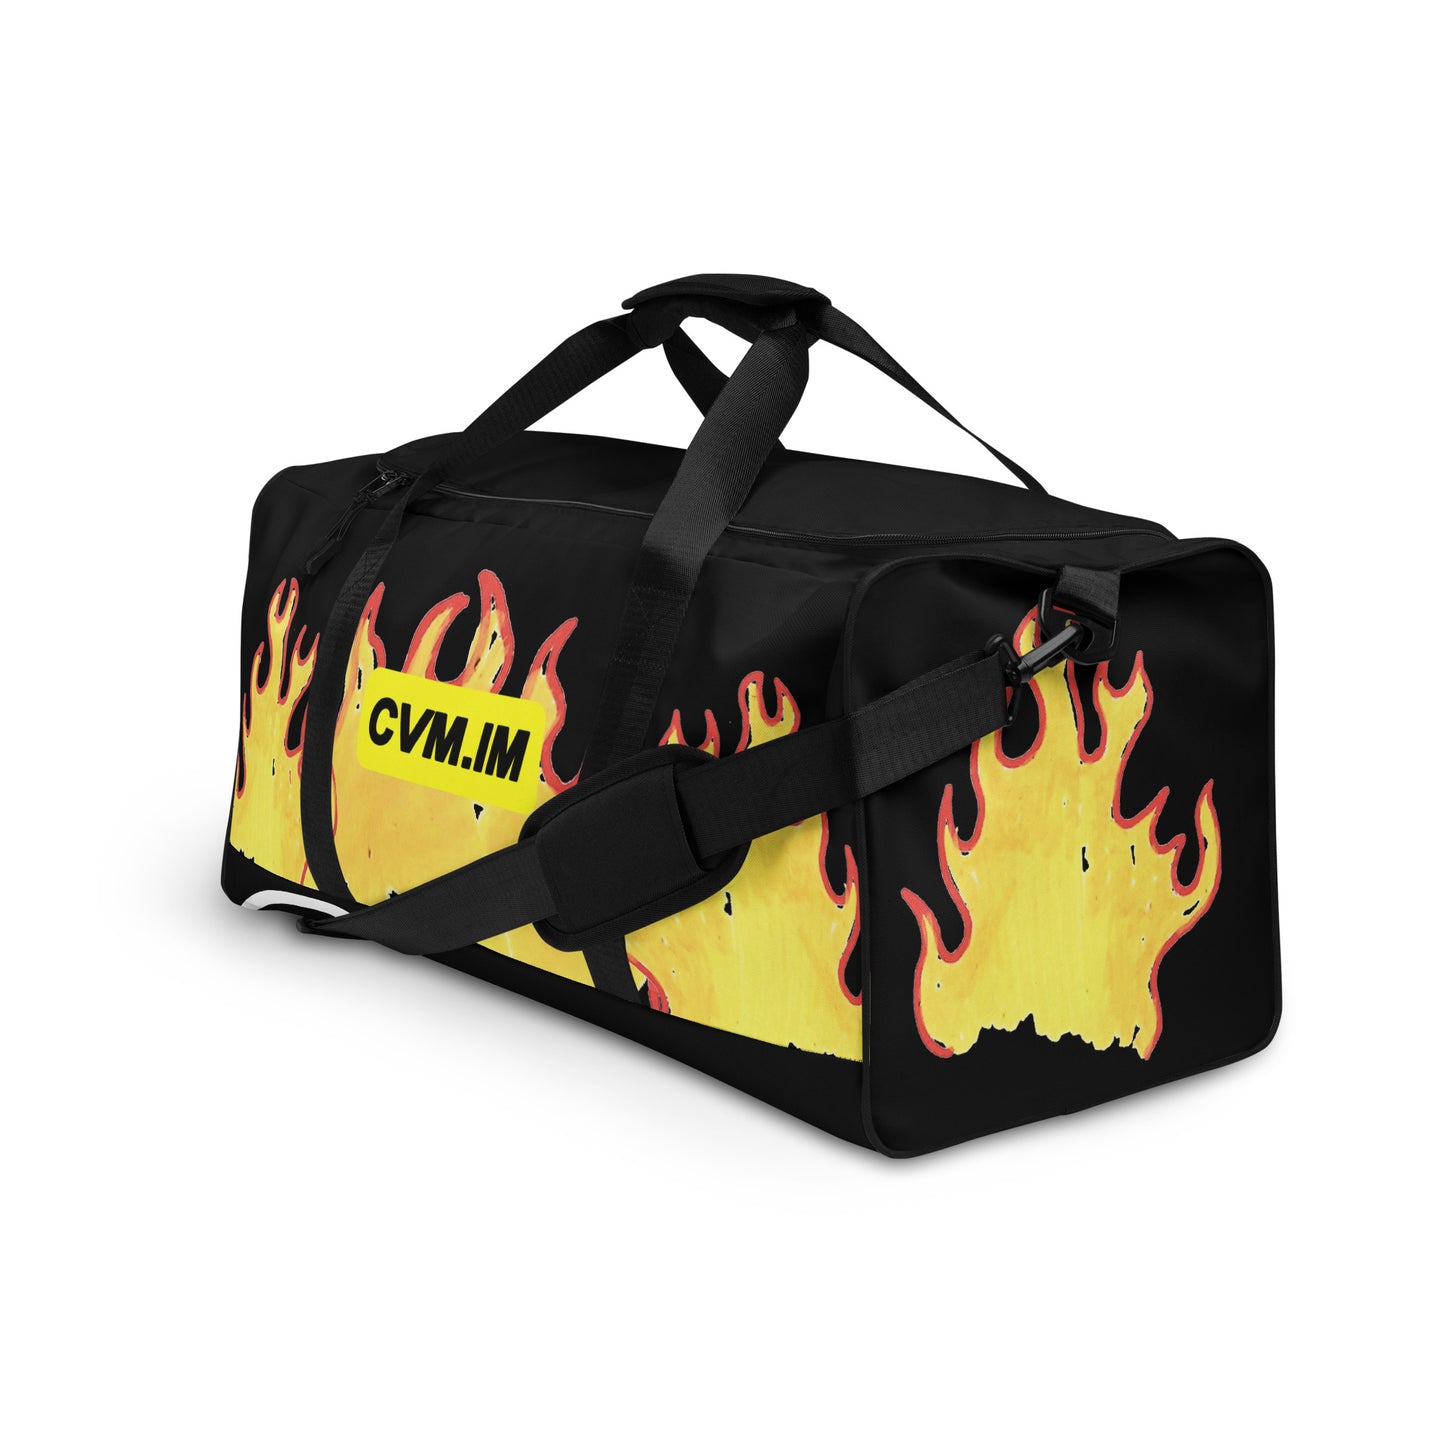 "FIRE DRILL" Duffle Bag